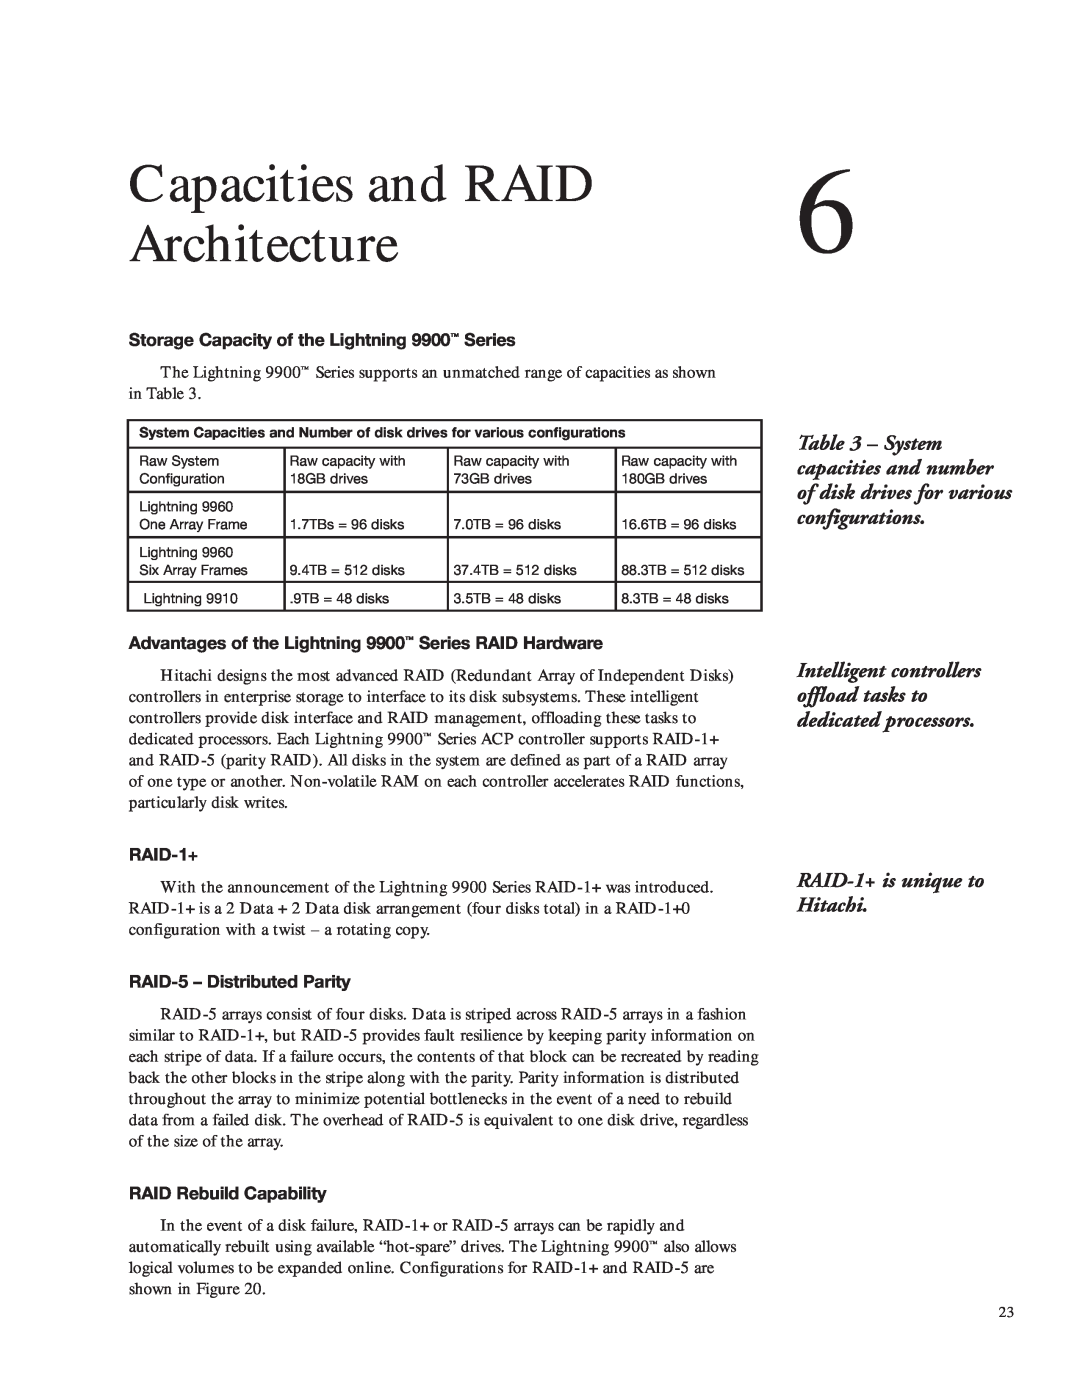 Hitachi 9960 manual Capacities and RAID Architecture, Storage Capacity of the Lightning 9900 Series, RAID-1+ 